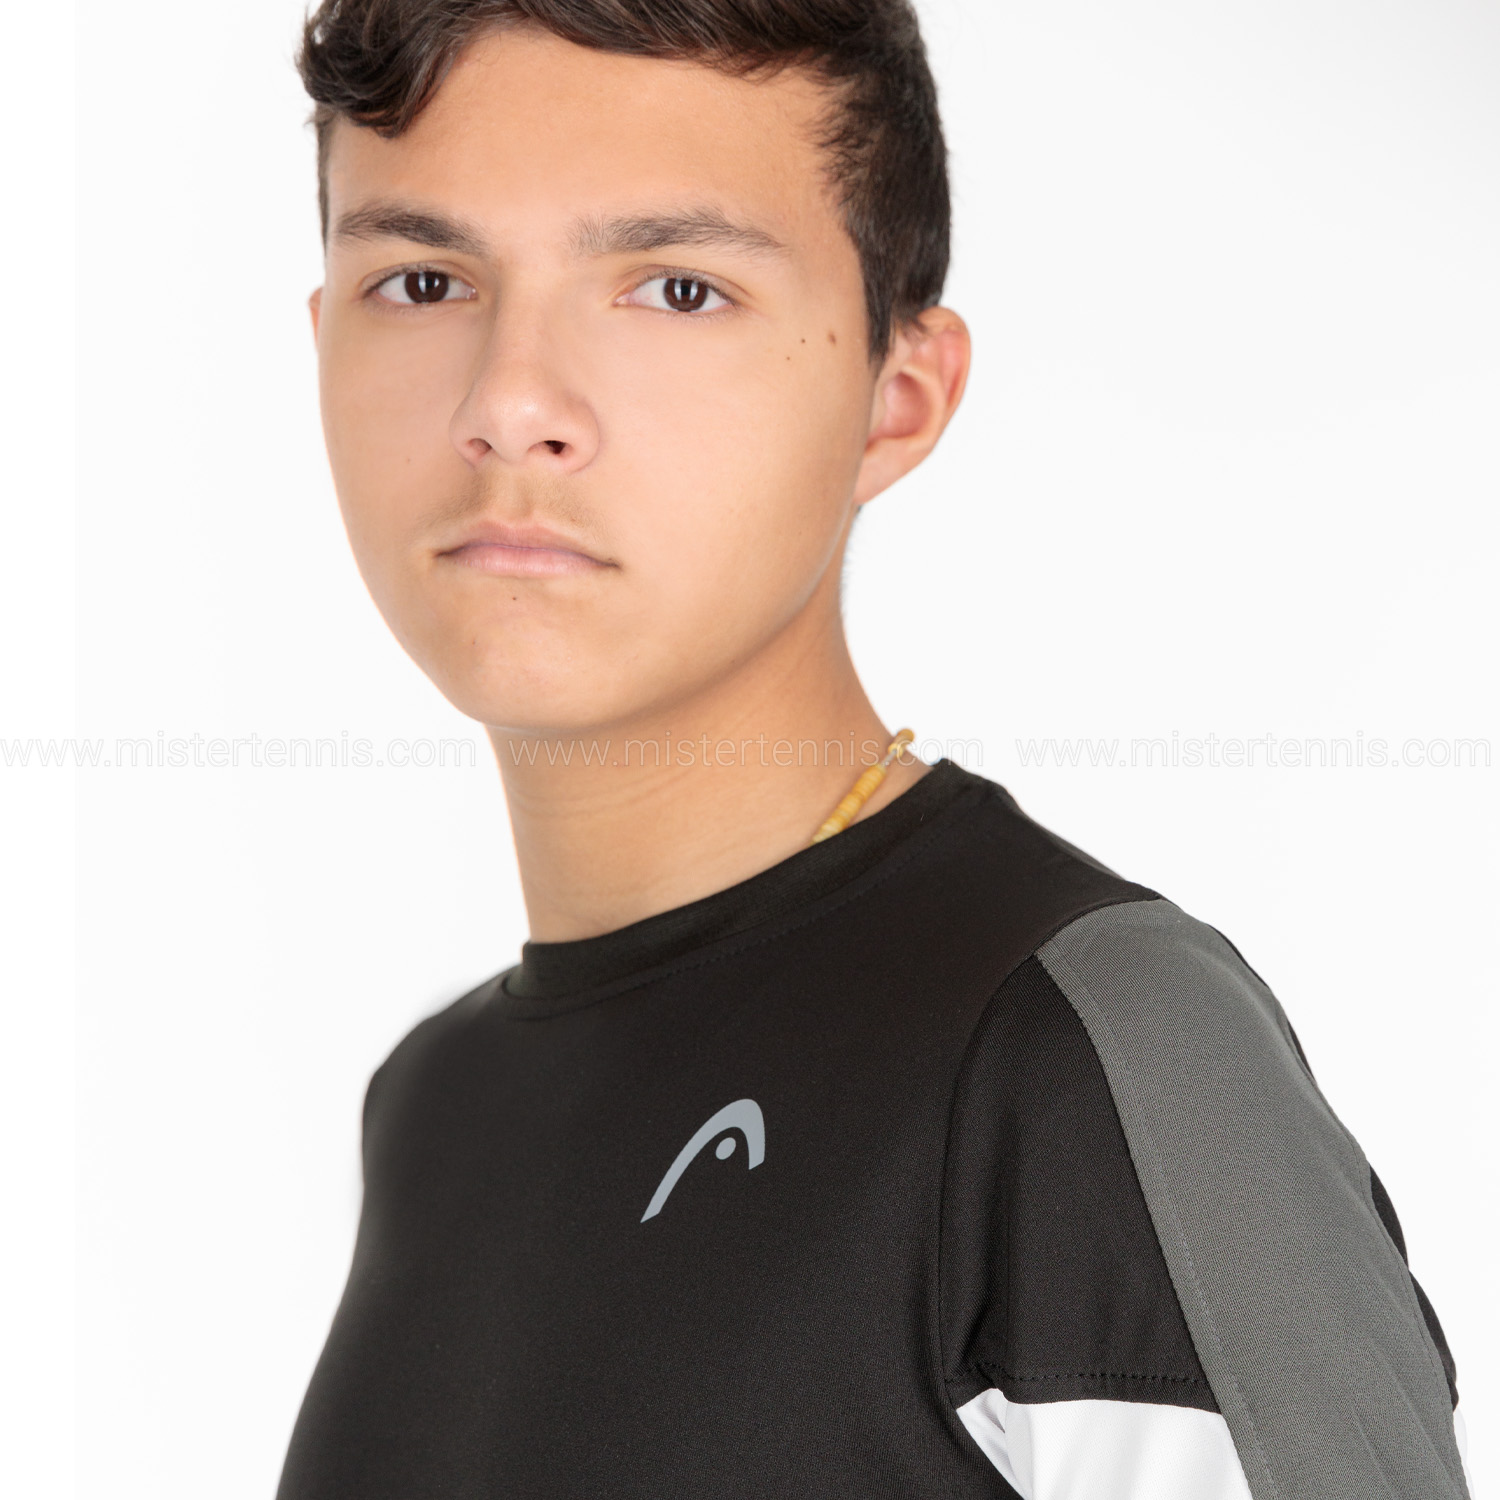 Head Club 22 Tech Camiseta Niño - Black